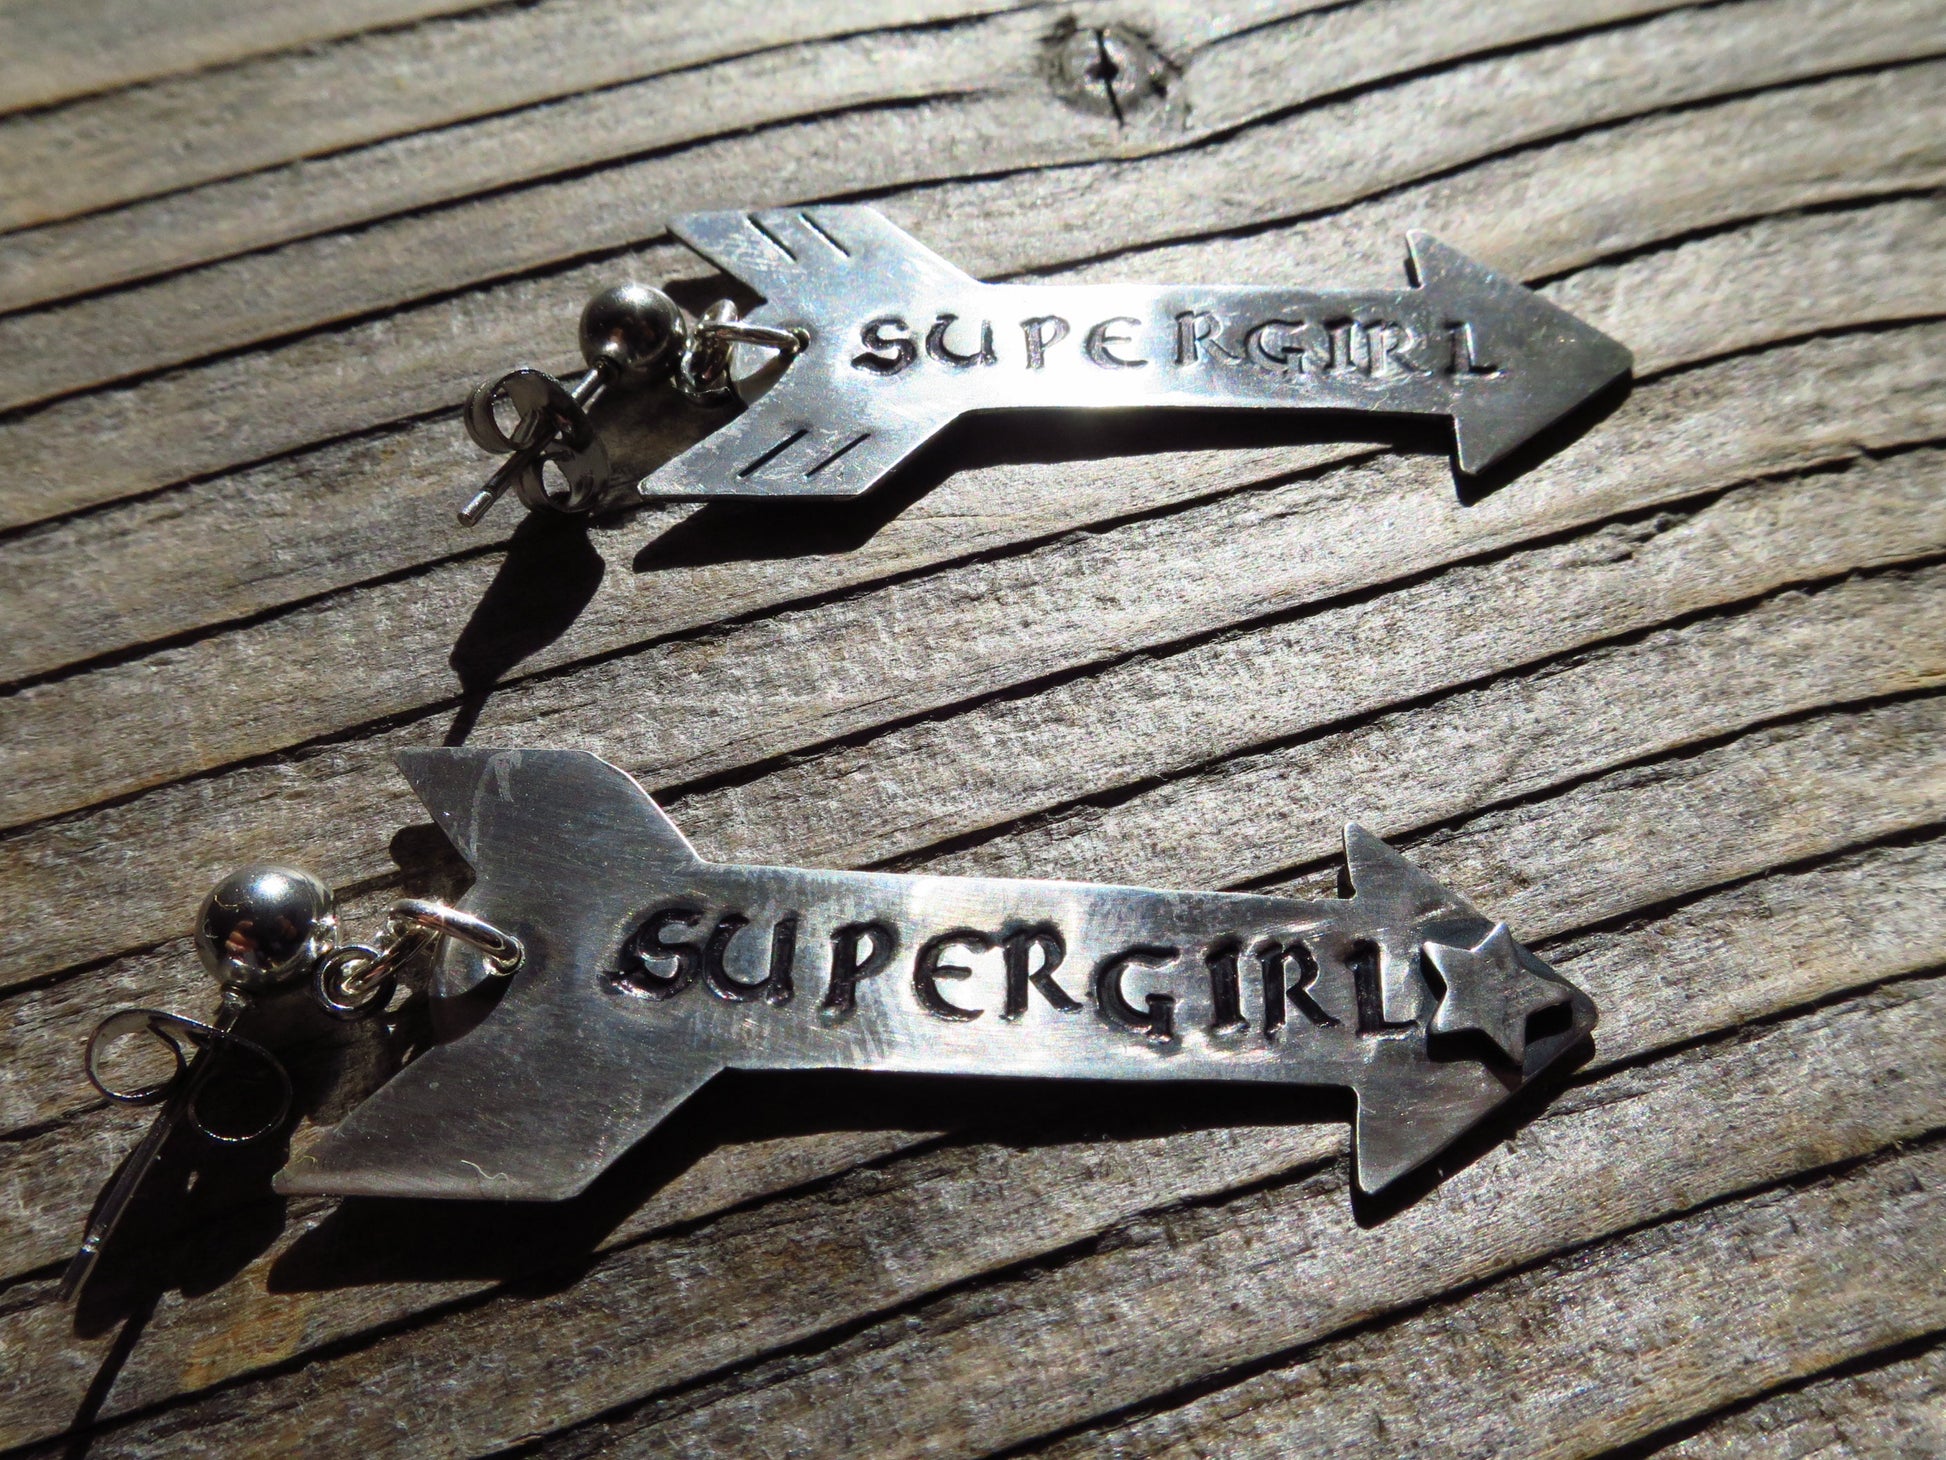 Supergirl earrings made of 925 Sterling Silver with stainless steel earstuds long arrow earrings retro look